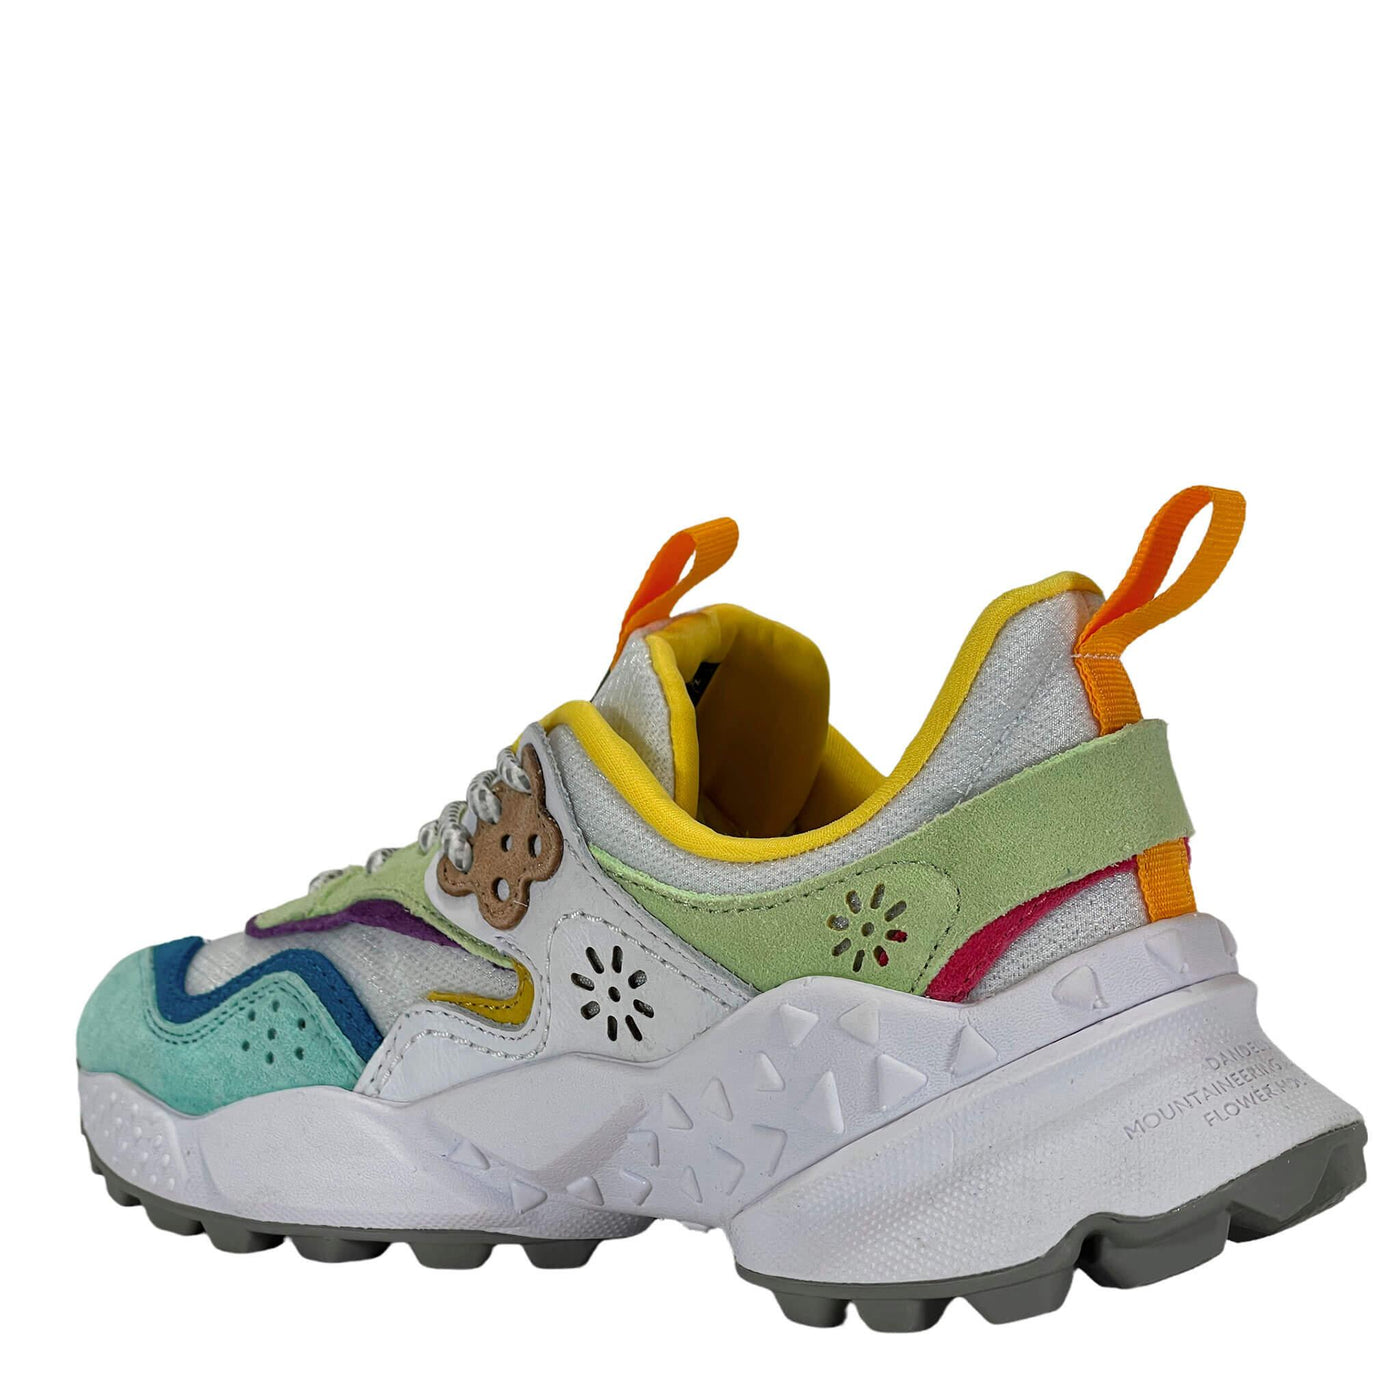 Flower Mountain Sneakers, 0012016783.02.1c75, Kotetsuwoman, Turchese Bianco, Bassiniboutique.it, 2022 p/e